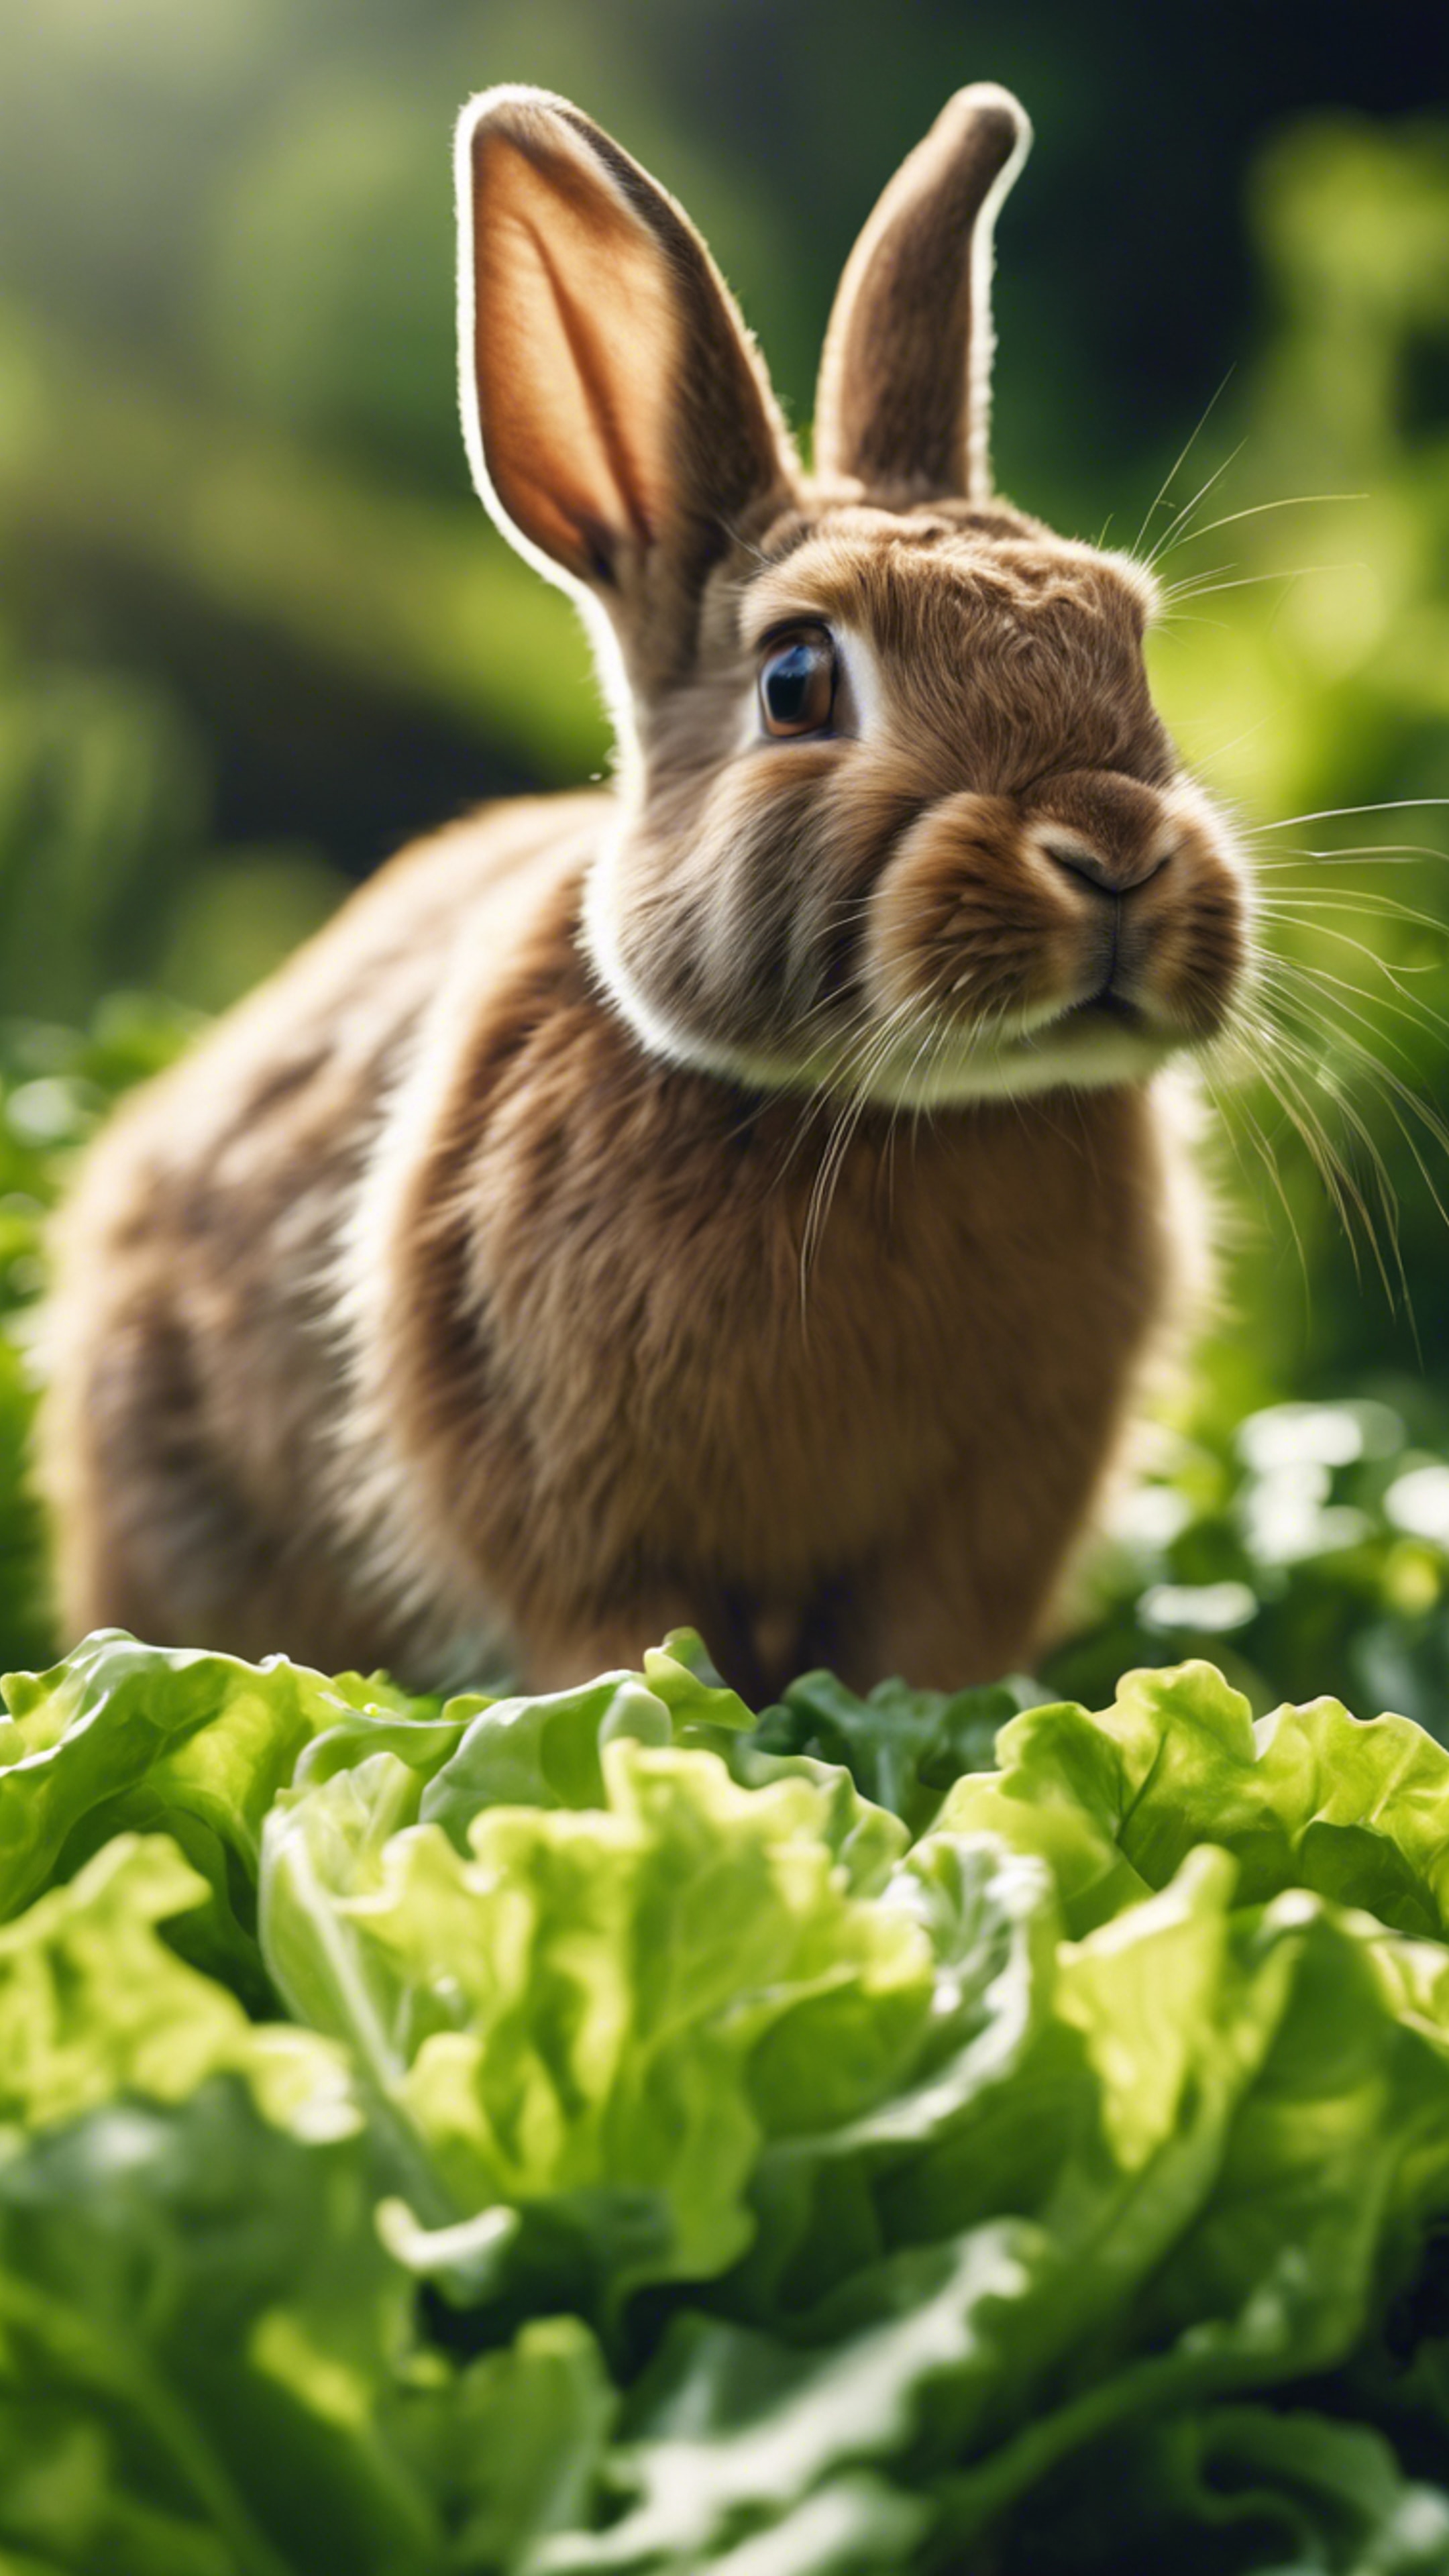 A cute brown rabbit nibbling on fresh green lettuce in a sunlit garden.壁紙[0f4f15256a1c40a6b3ba]